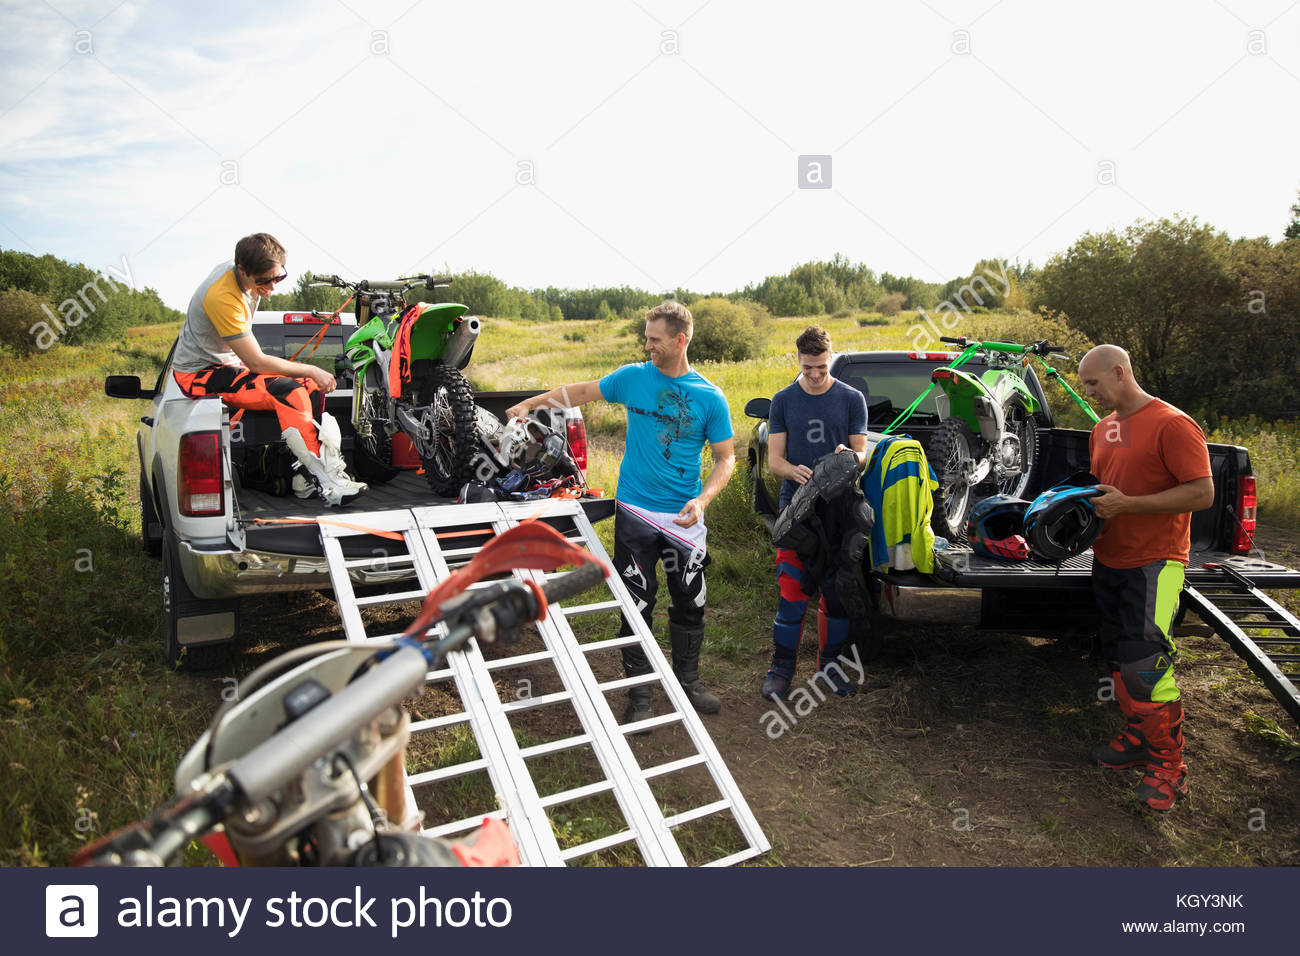 Men unloading motorbikes on trucks in rural field Stock Photo